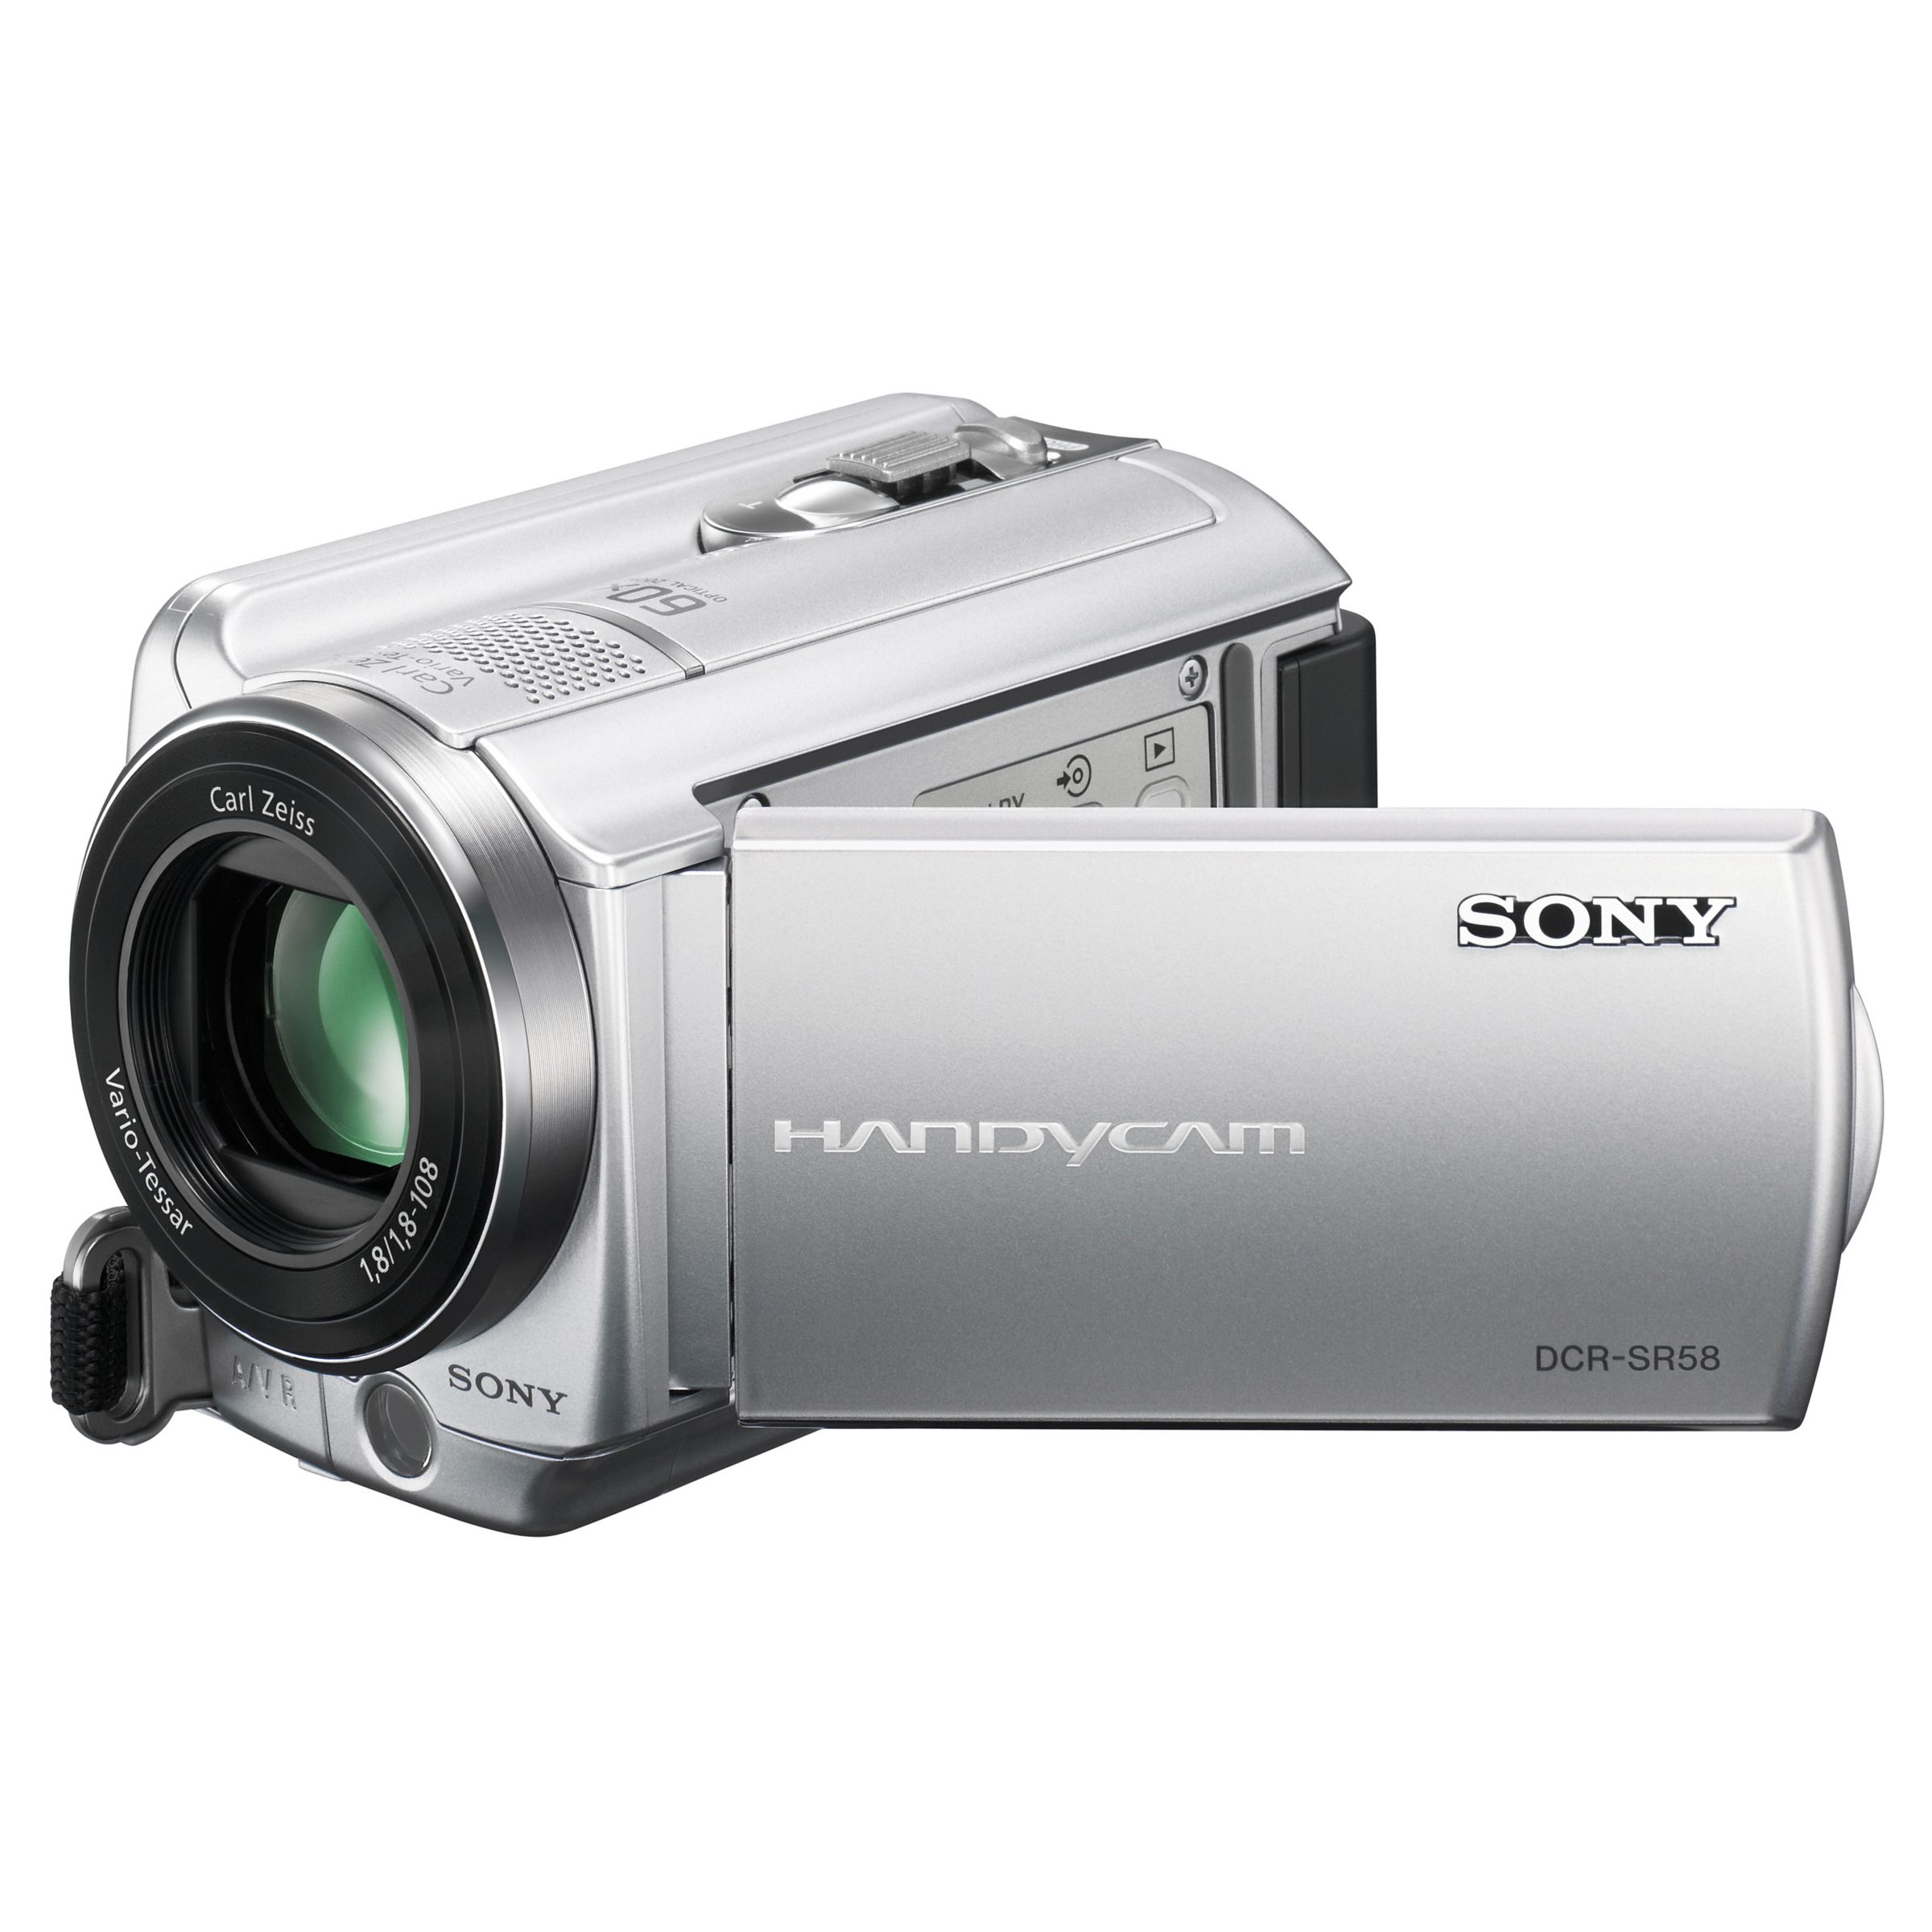 Sony DCR-SR58E 80GB Hard Disc Handycam Camcorder, Silver at JohnLewis